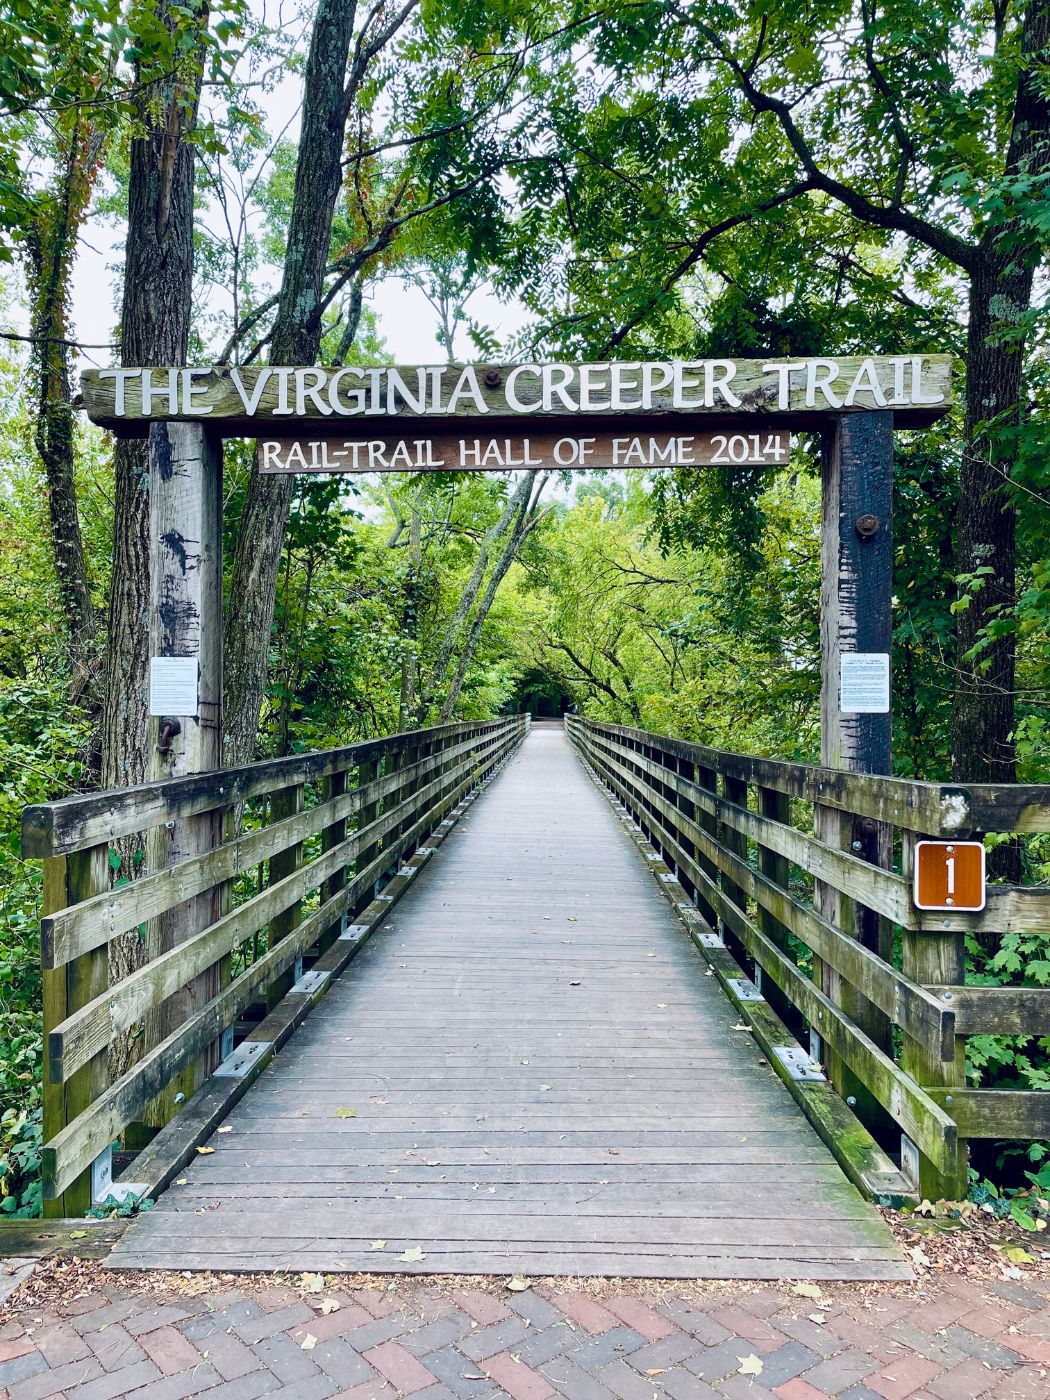 Start of the Virginia Creeper Rail Trail